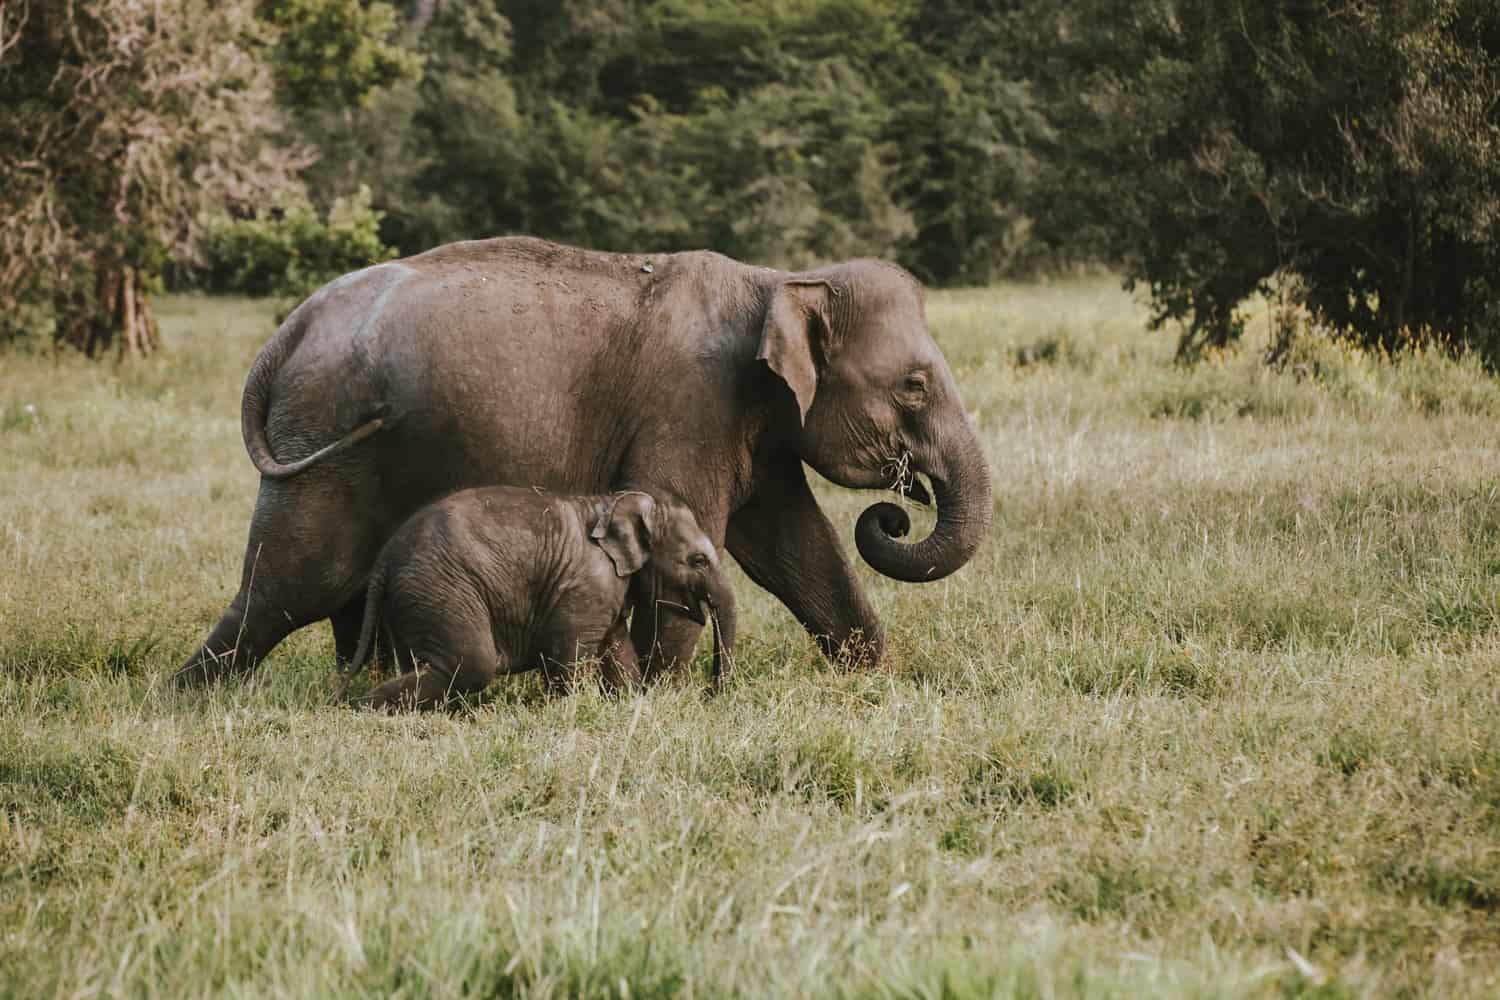 Elephants at Minneriya national park